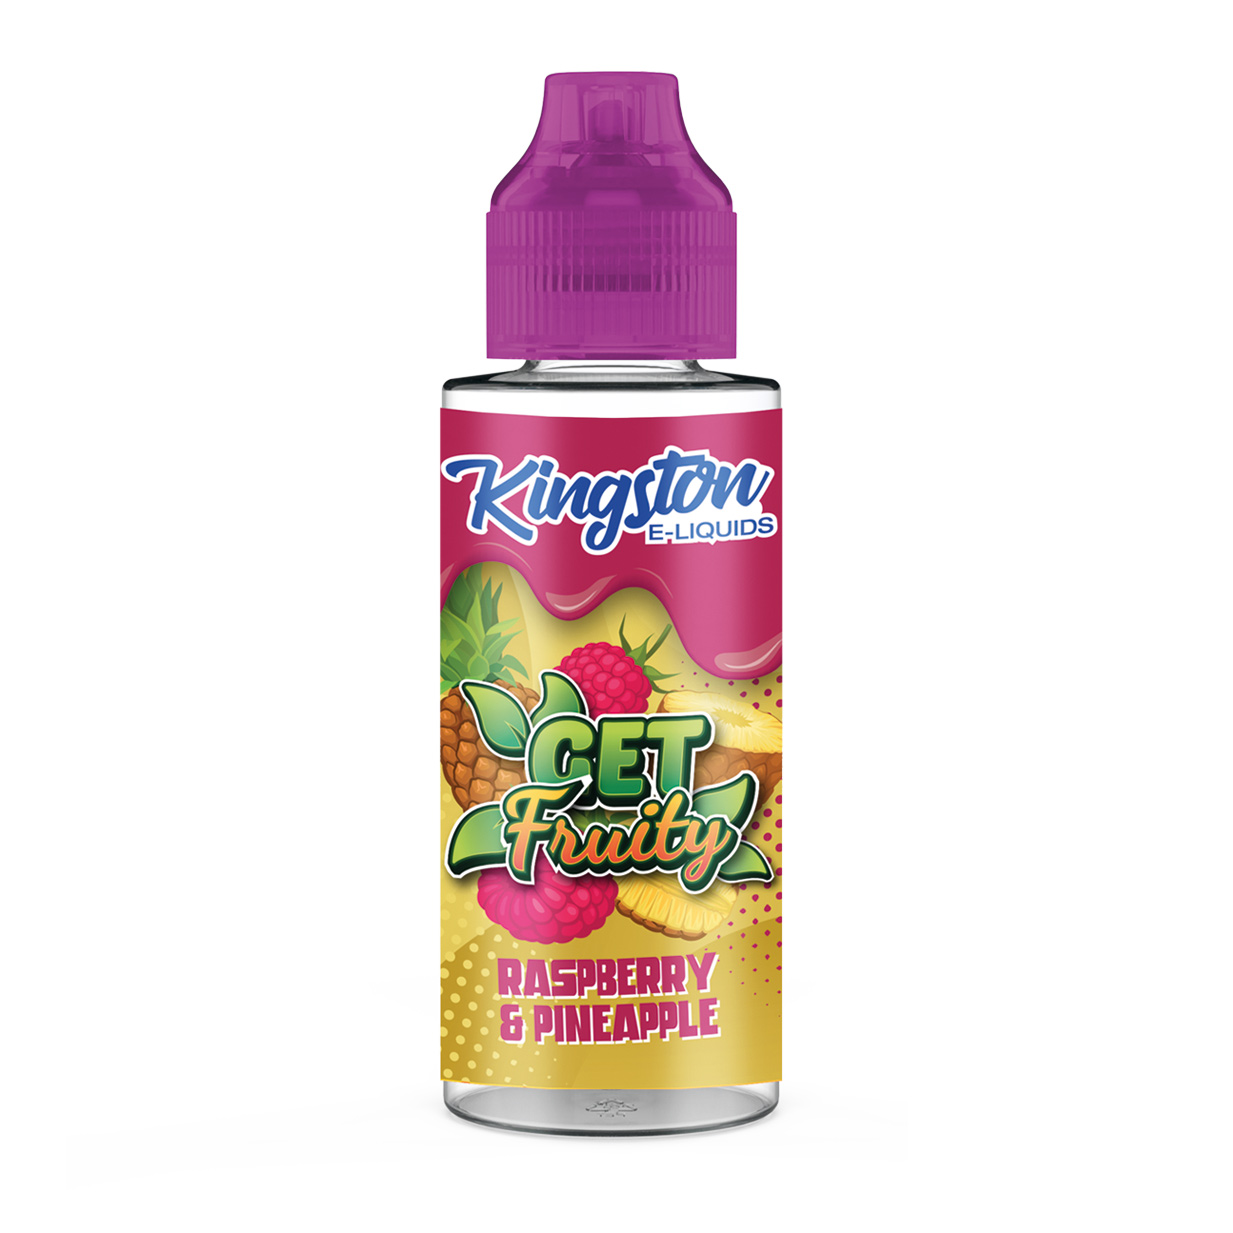 Raspberry & Pineapple by Kingston Get Fruity 100ml.jpg